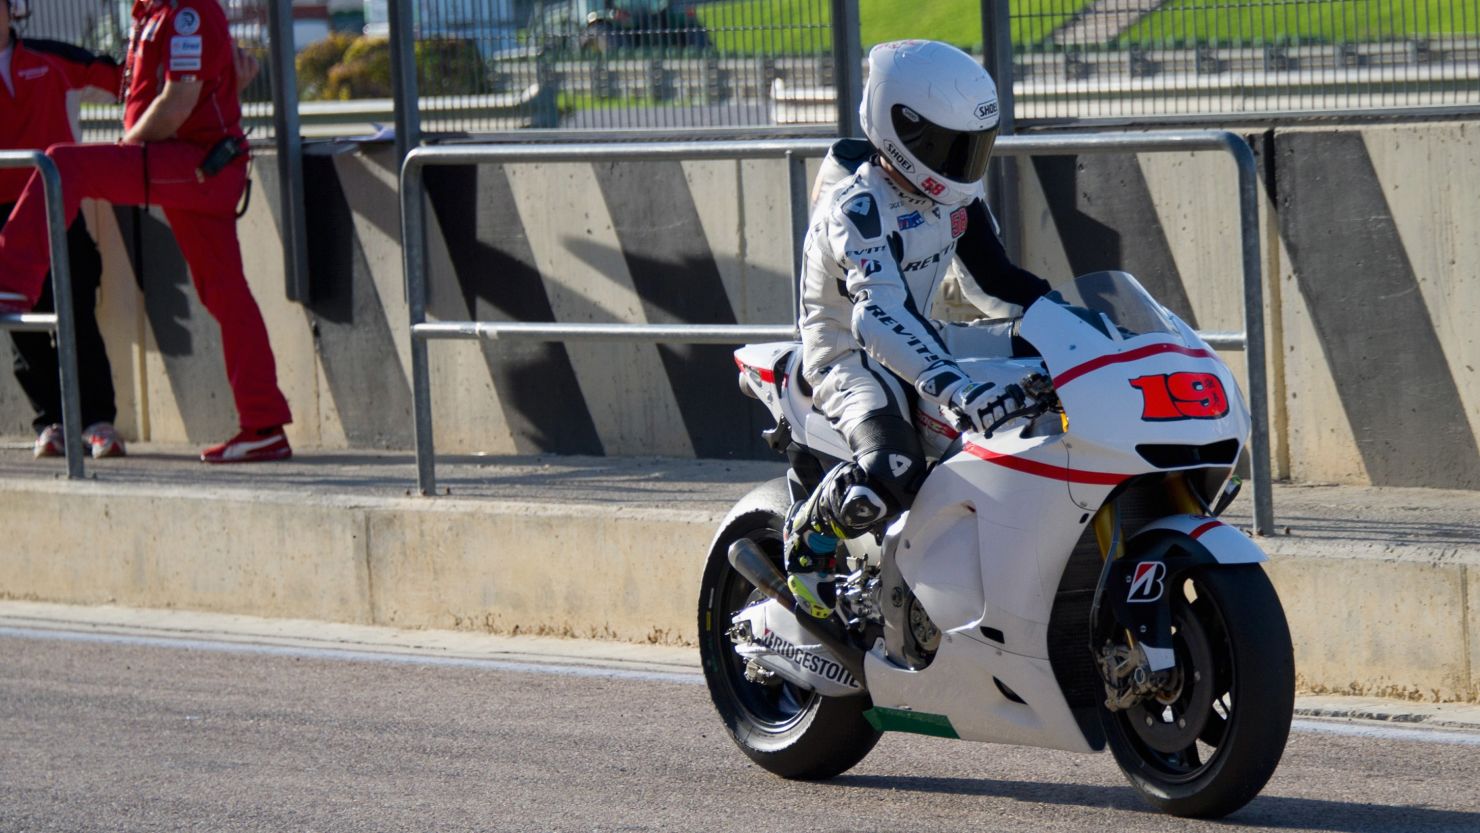 Alvaro Bautista is already testing his new Honda MotoGP bike after leaving the Suzuki team.